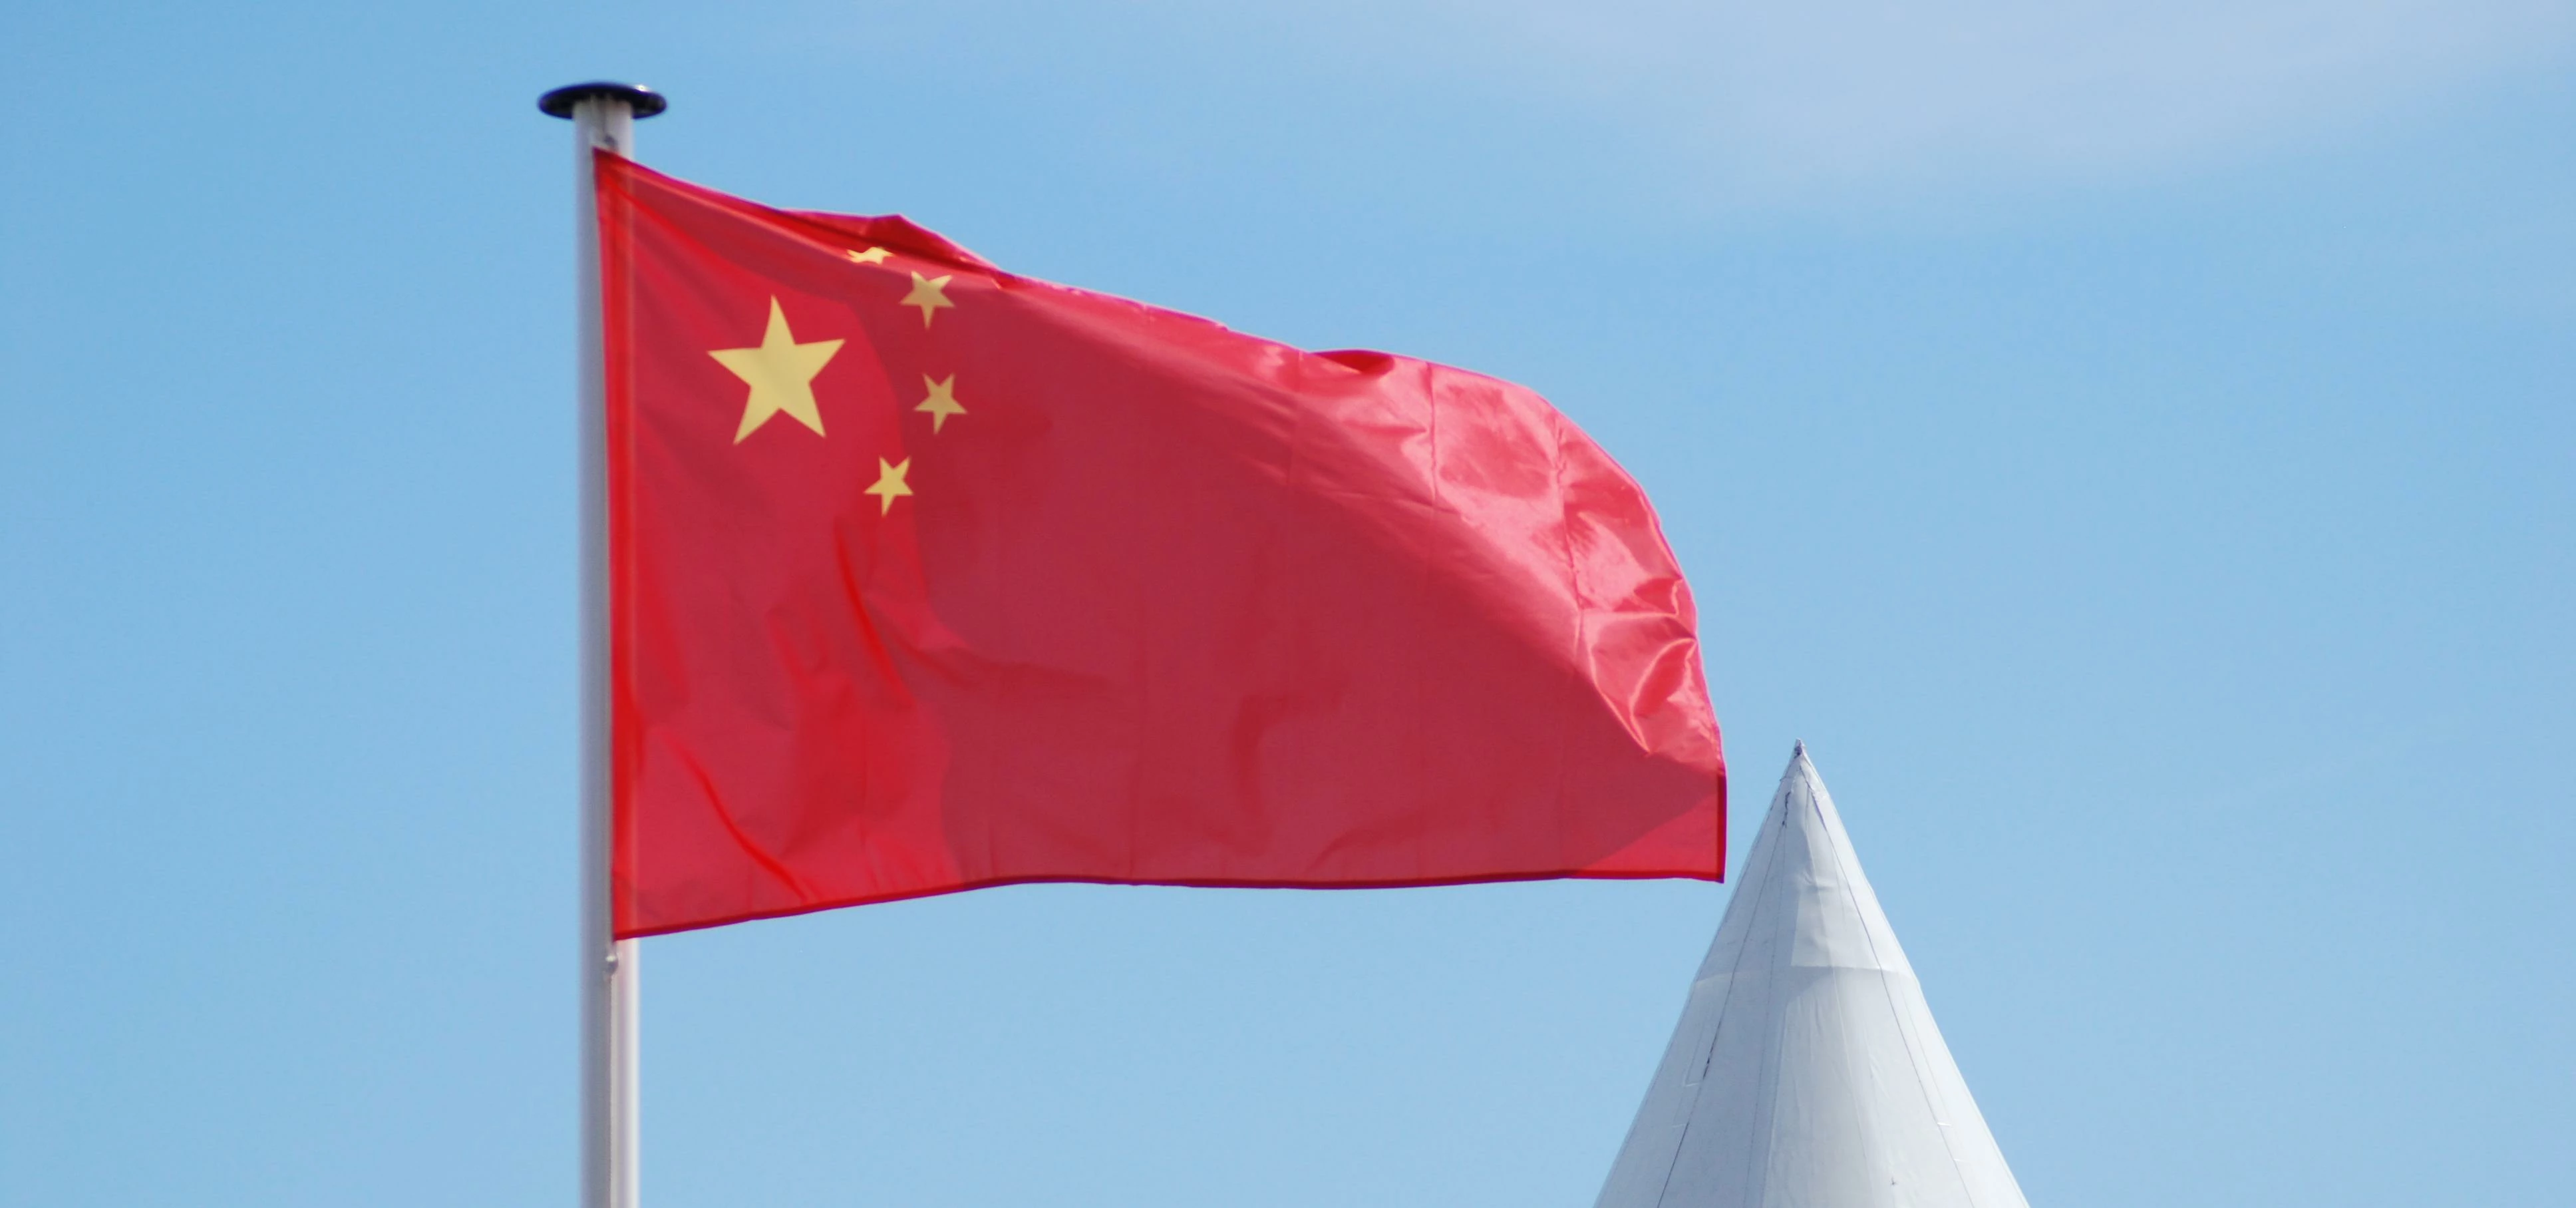 China Flag and Dome